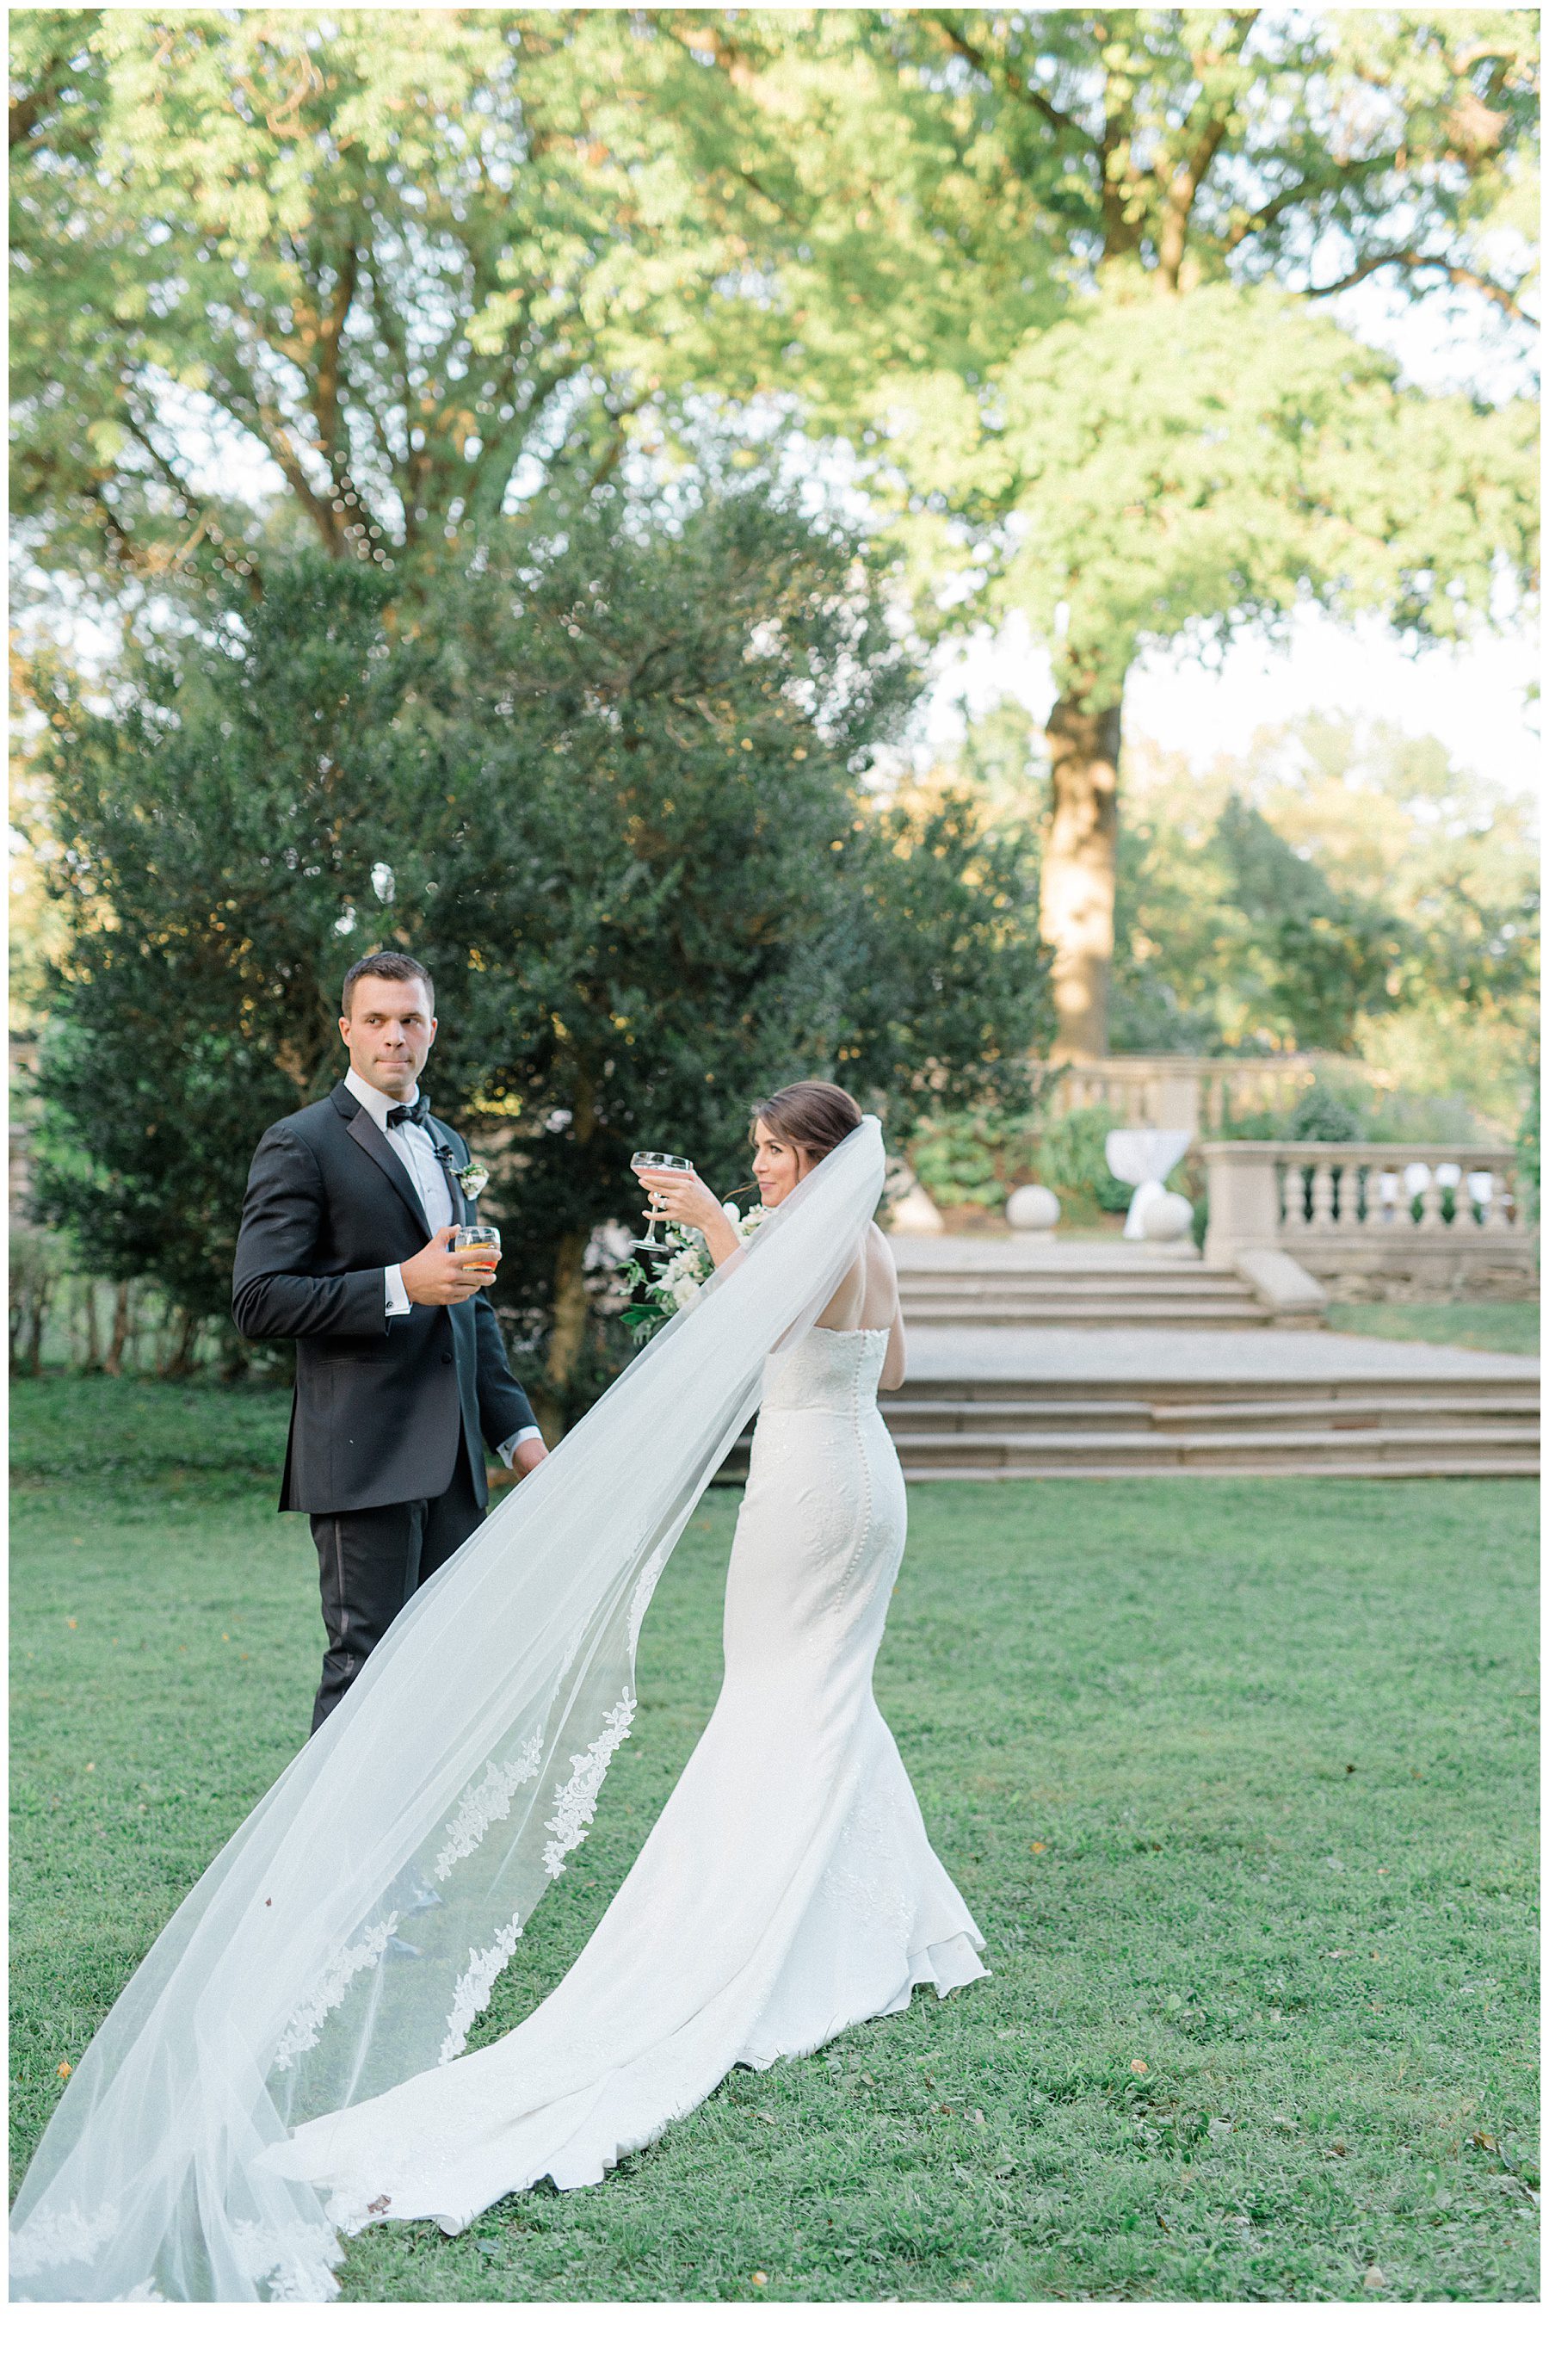 Early Fall Wedding at Curtis Arboretum in Wyncote, Pennsylvania